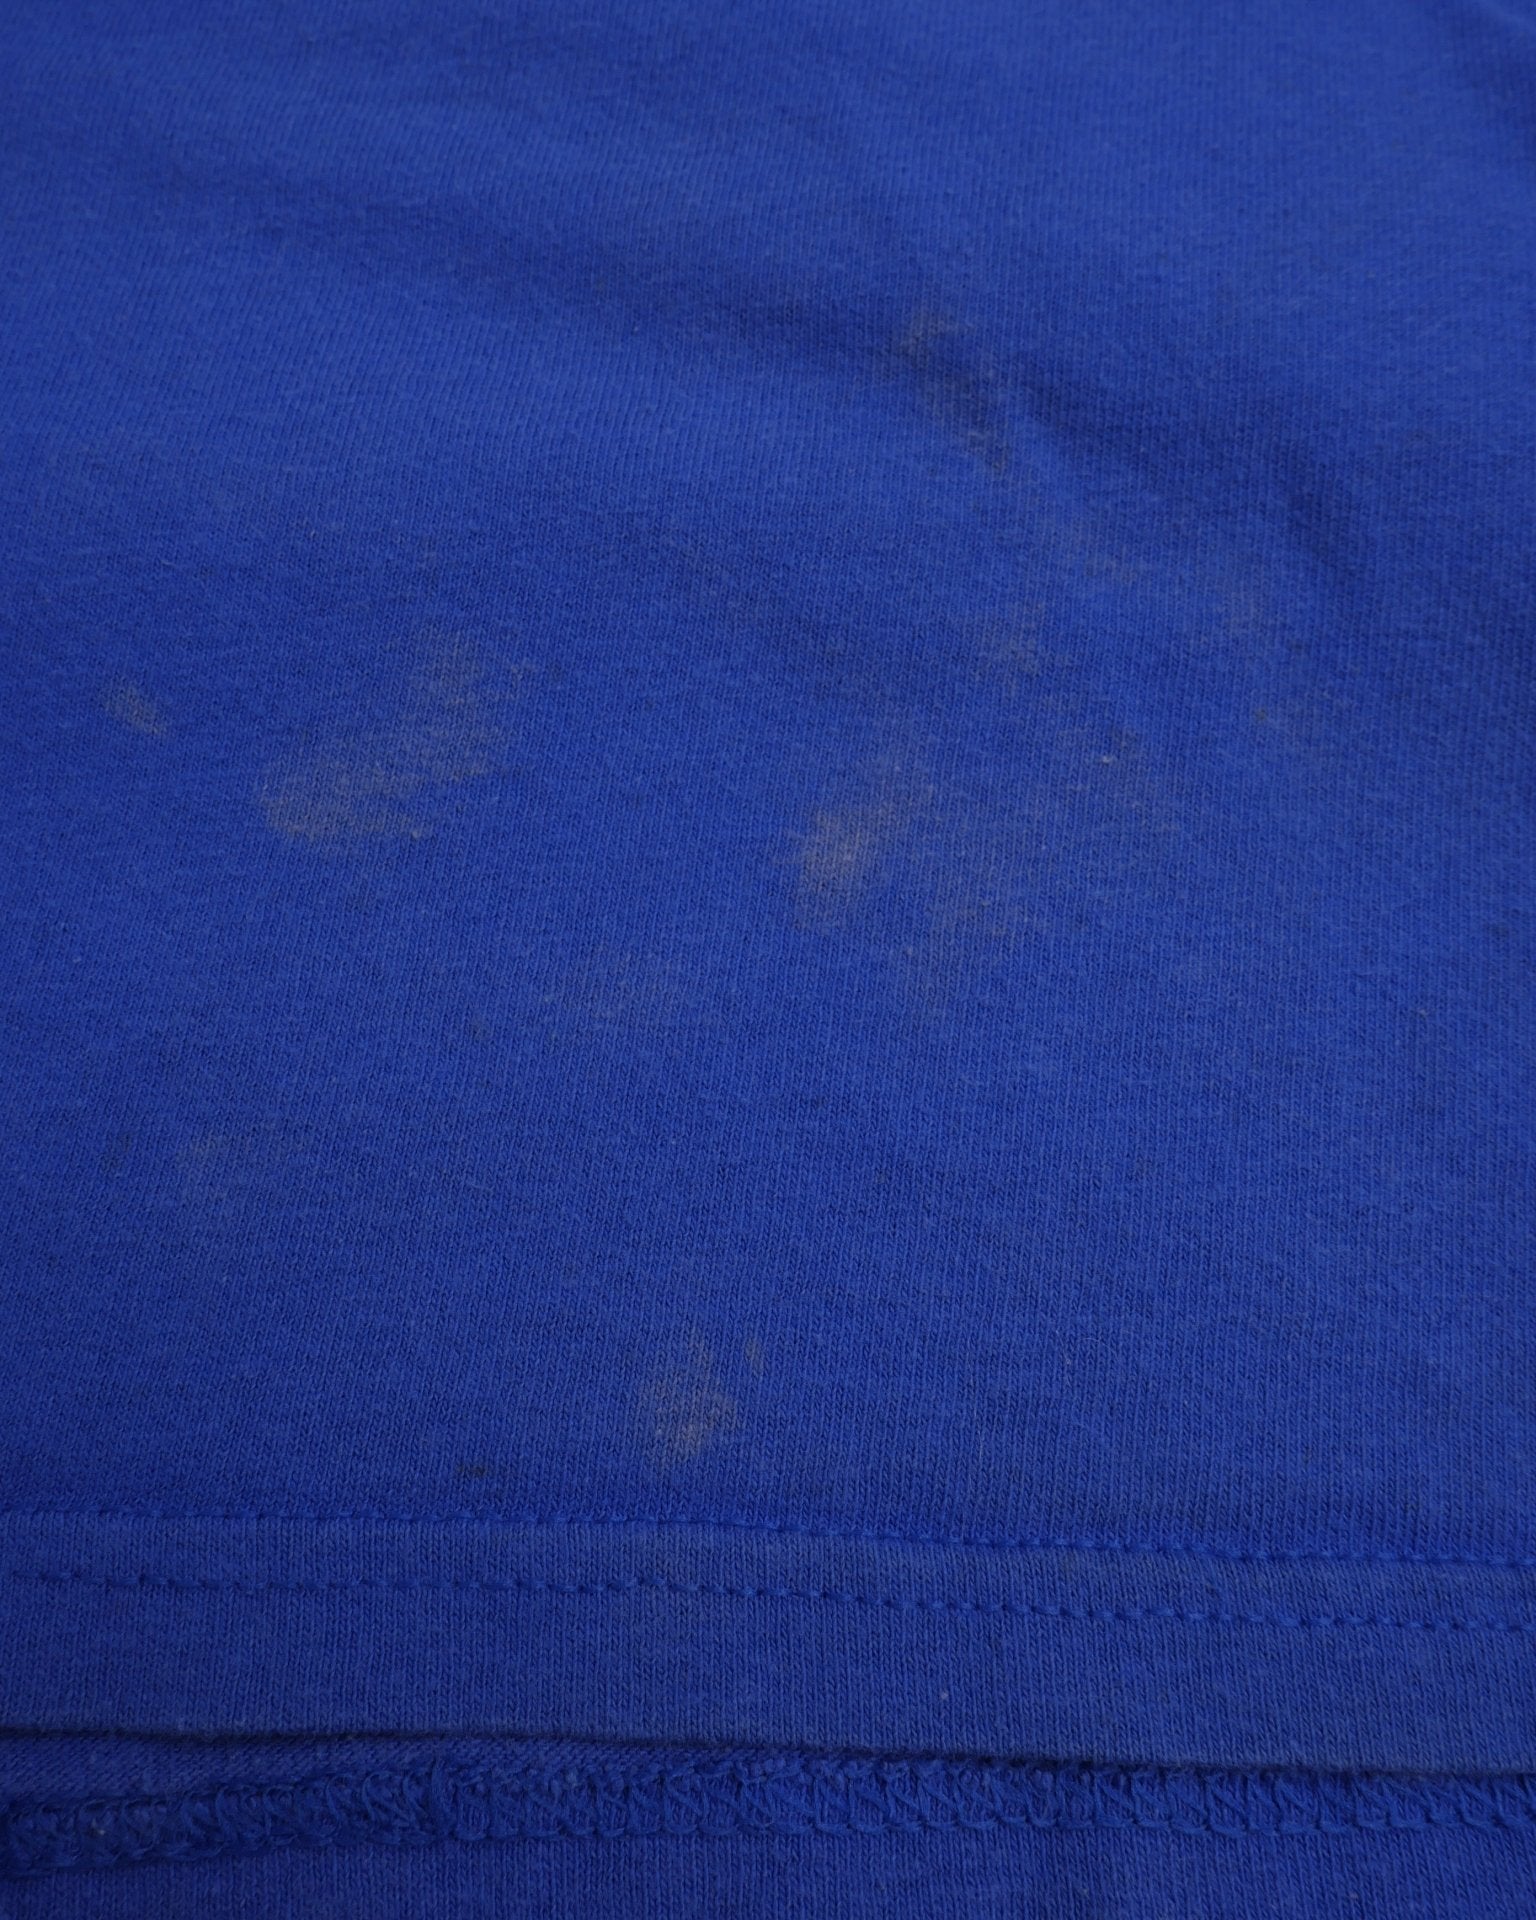 Nike printed Swooh blue Shirt - Peeces